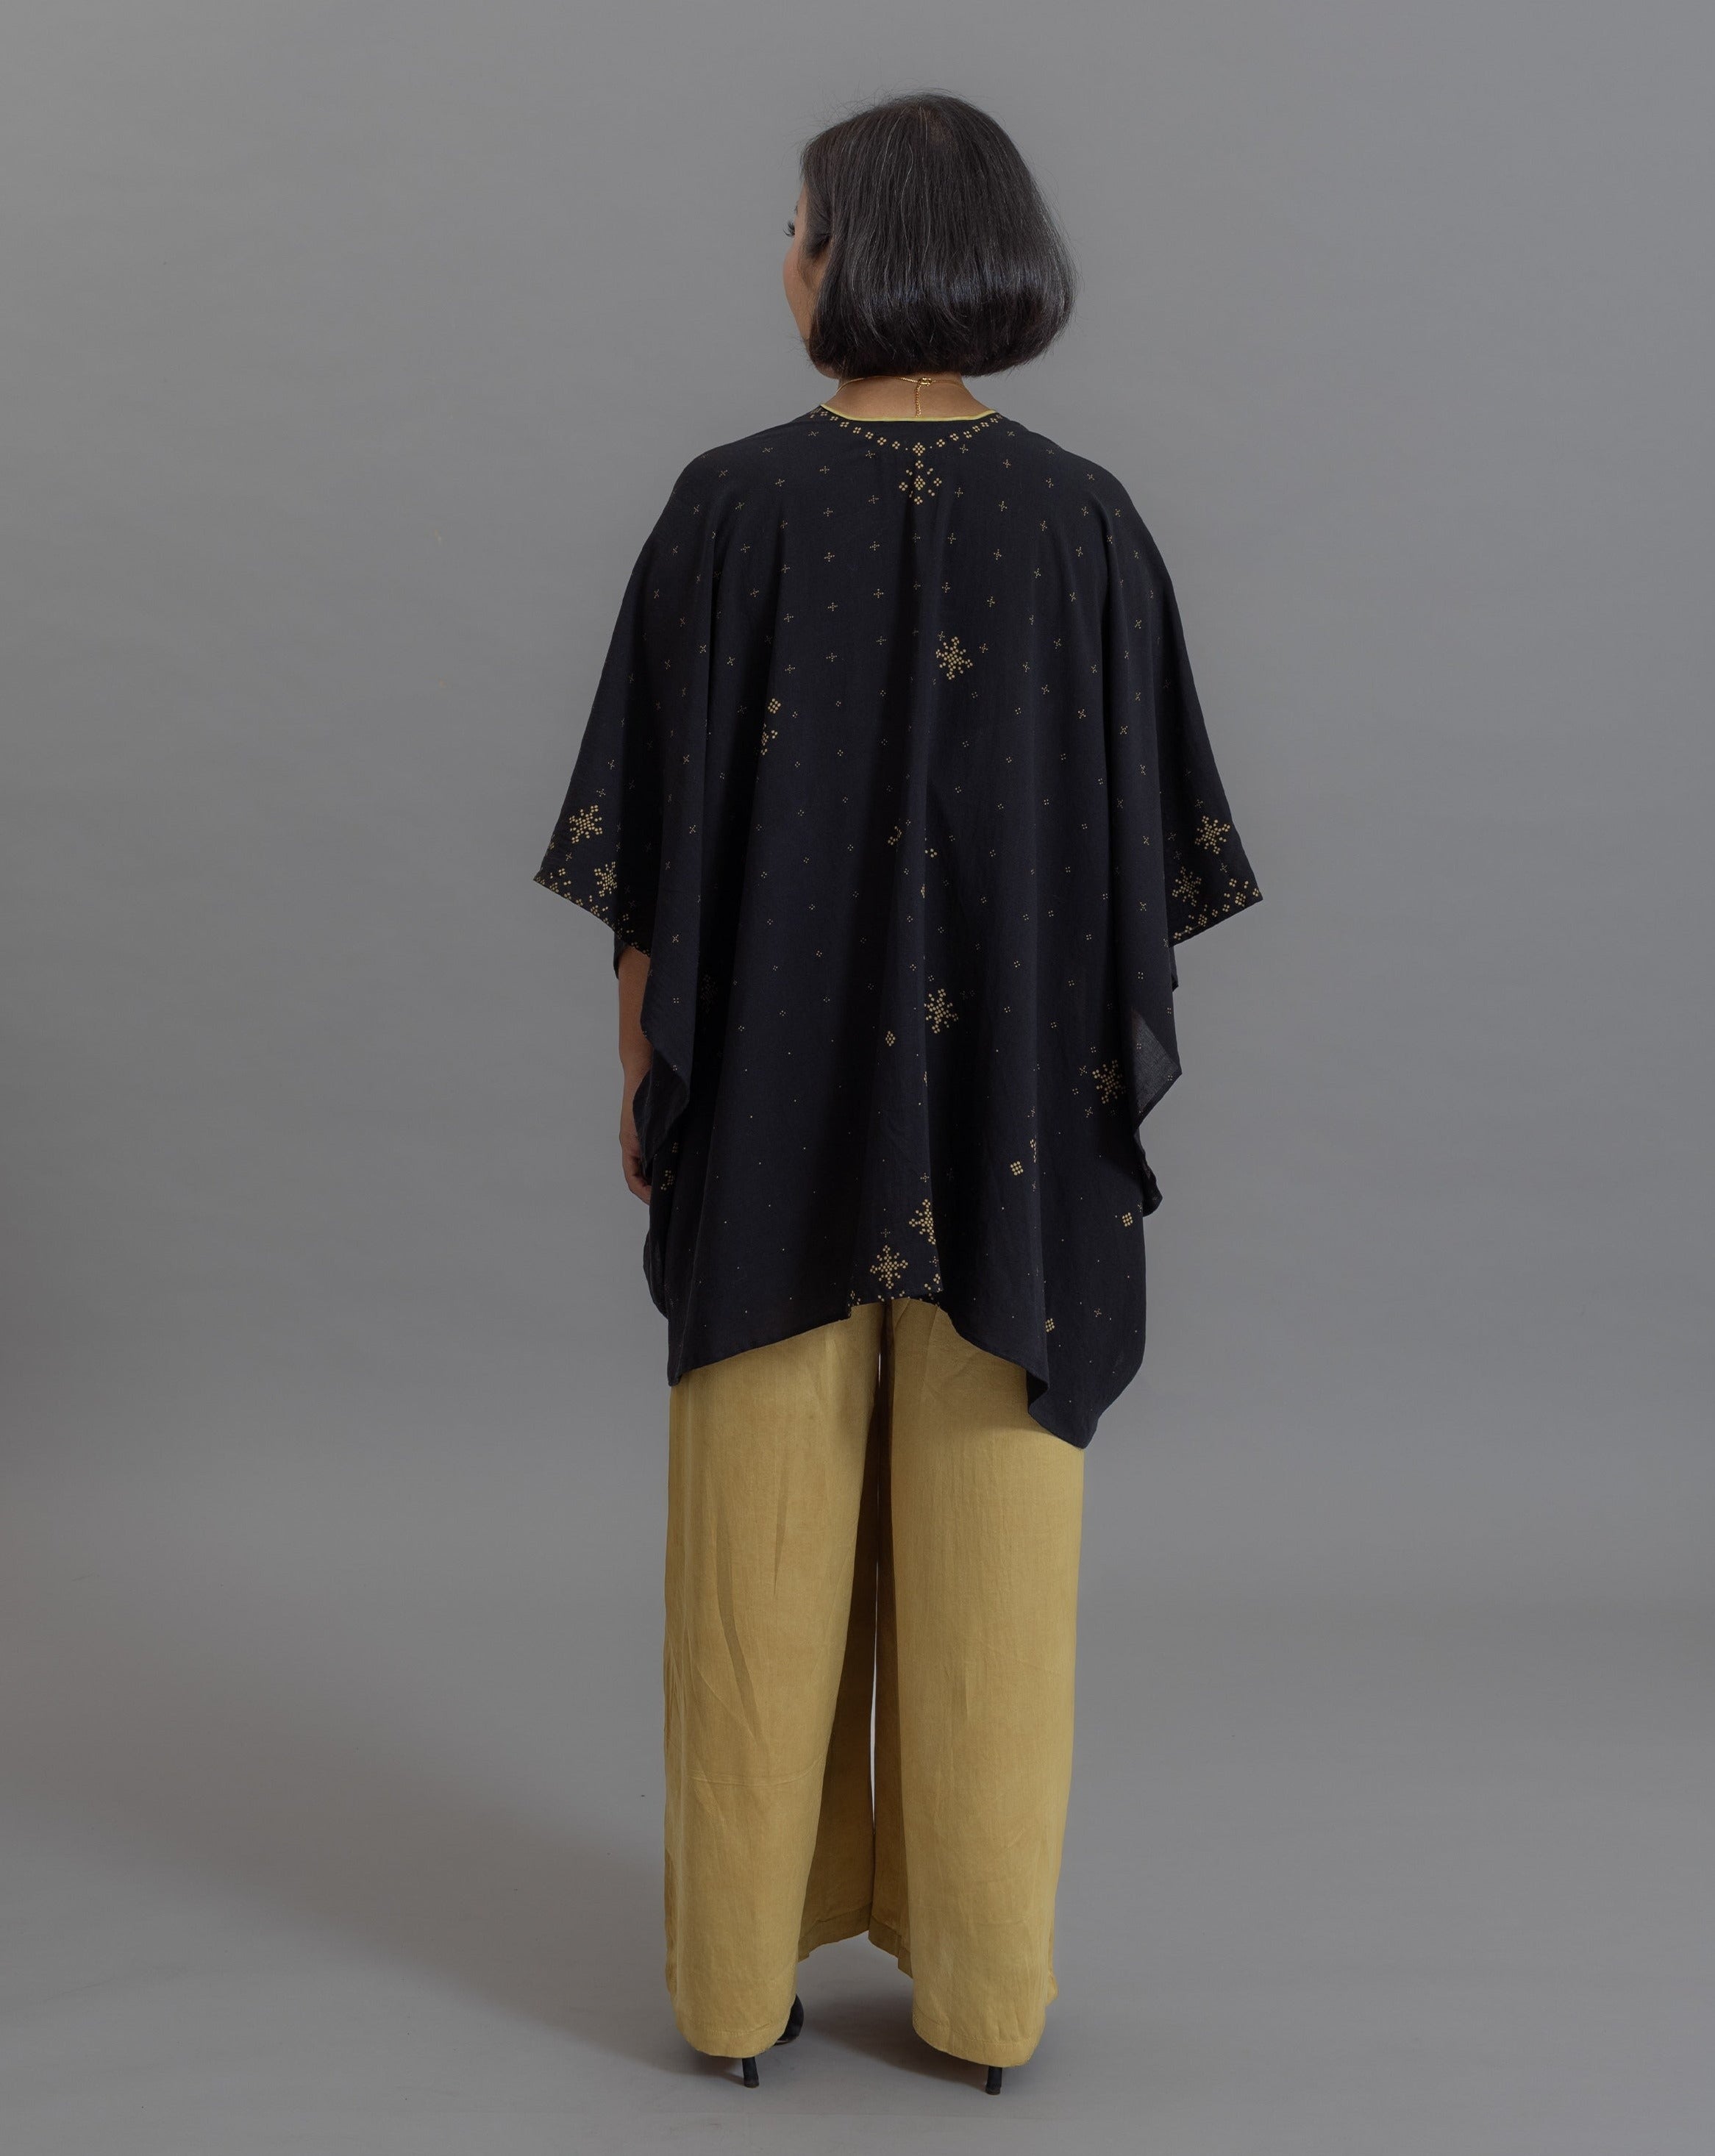 throw, outer, women's wear, women's outer, batik, handcrafted, craft